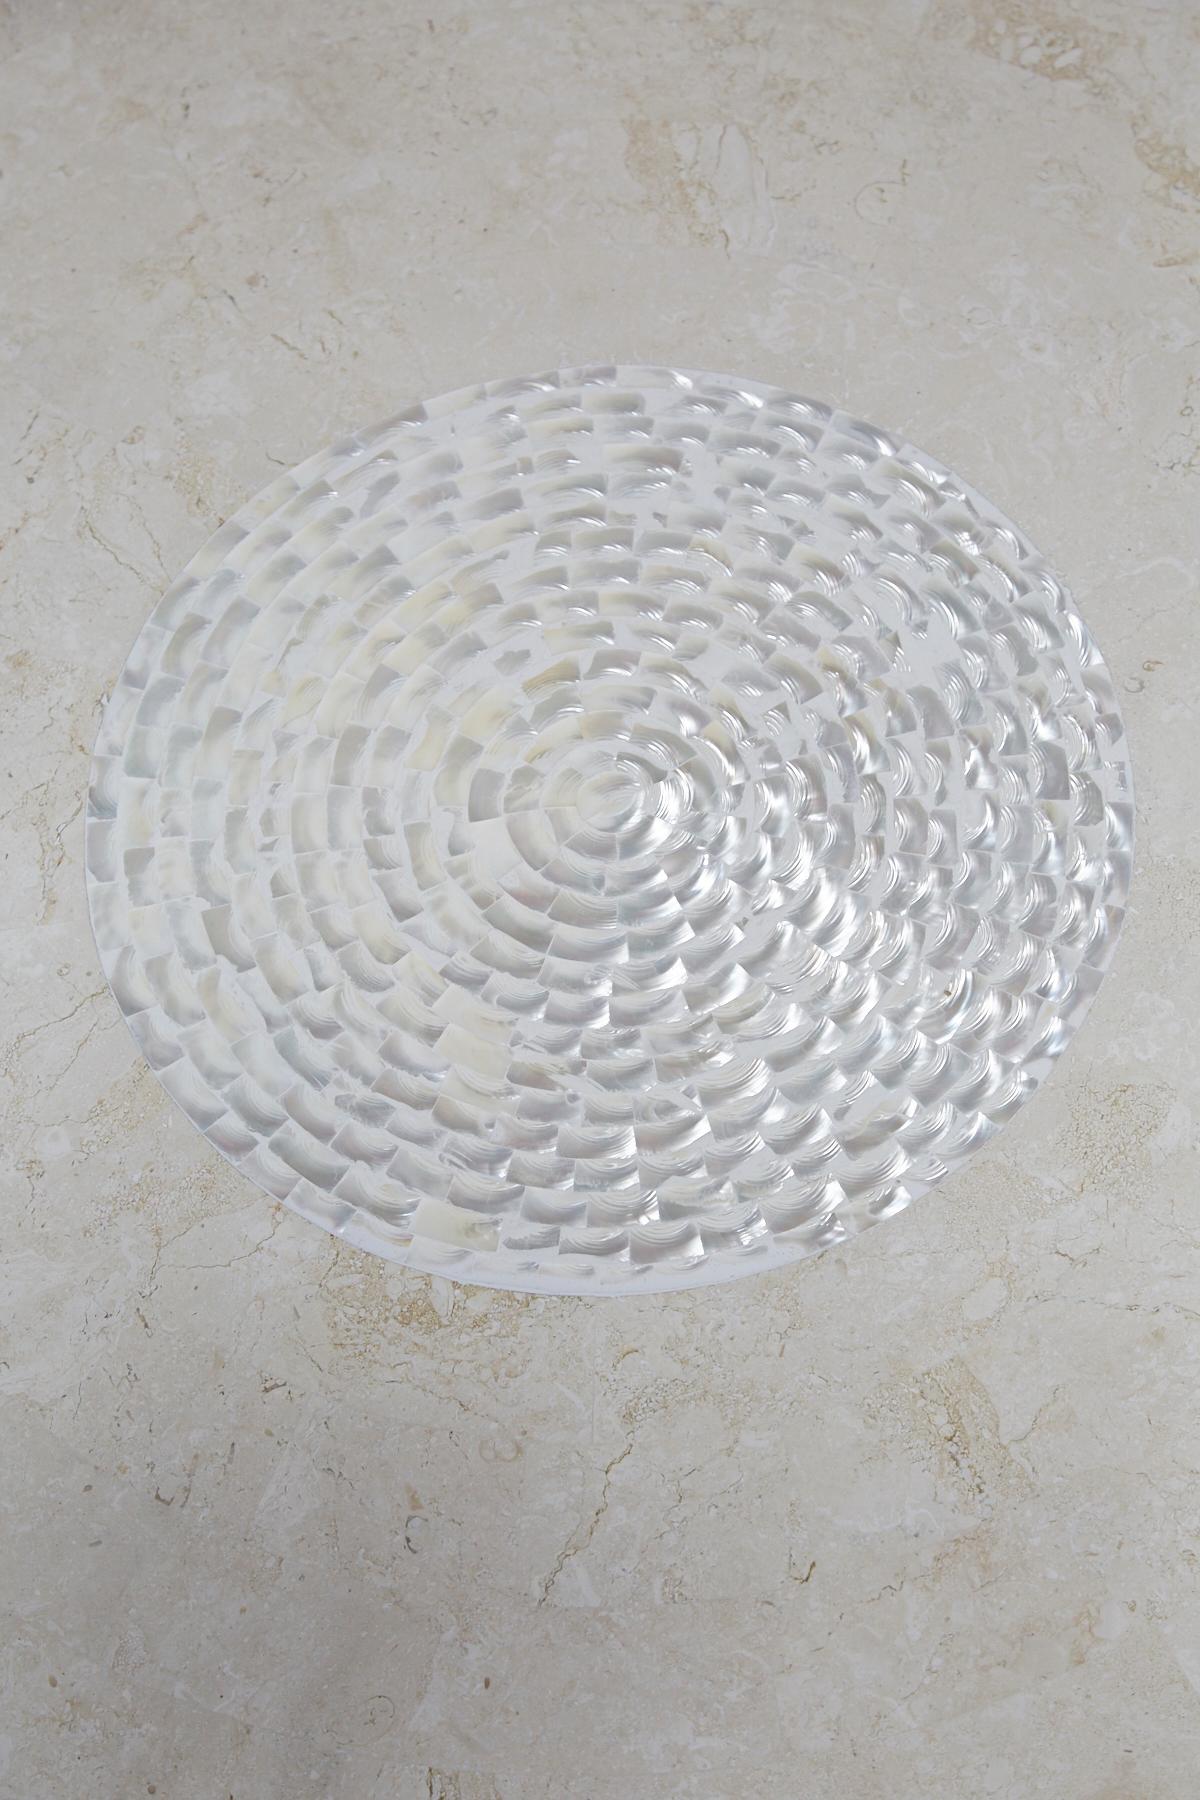 Tessellated Stone and Seashell Inlay 